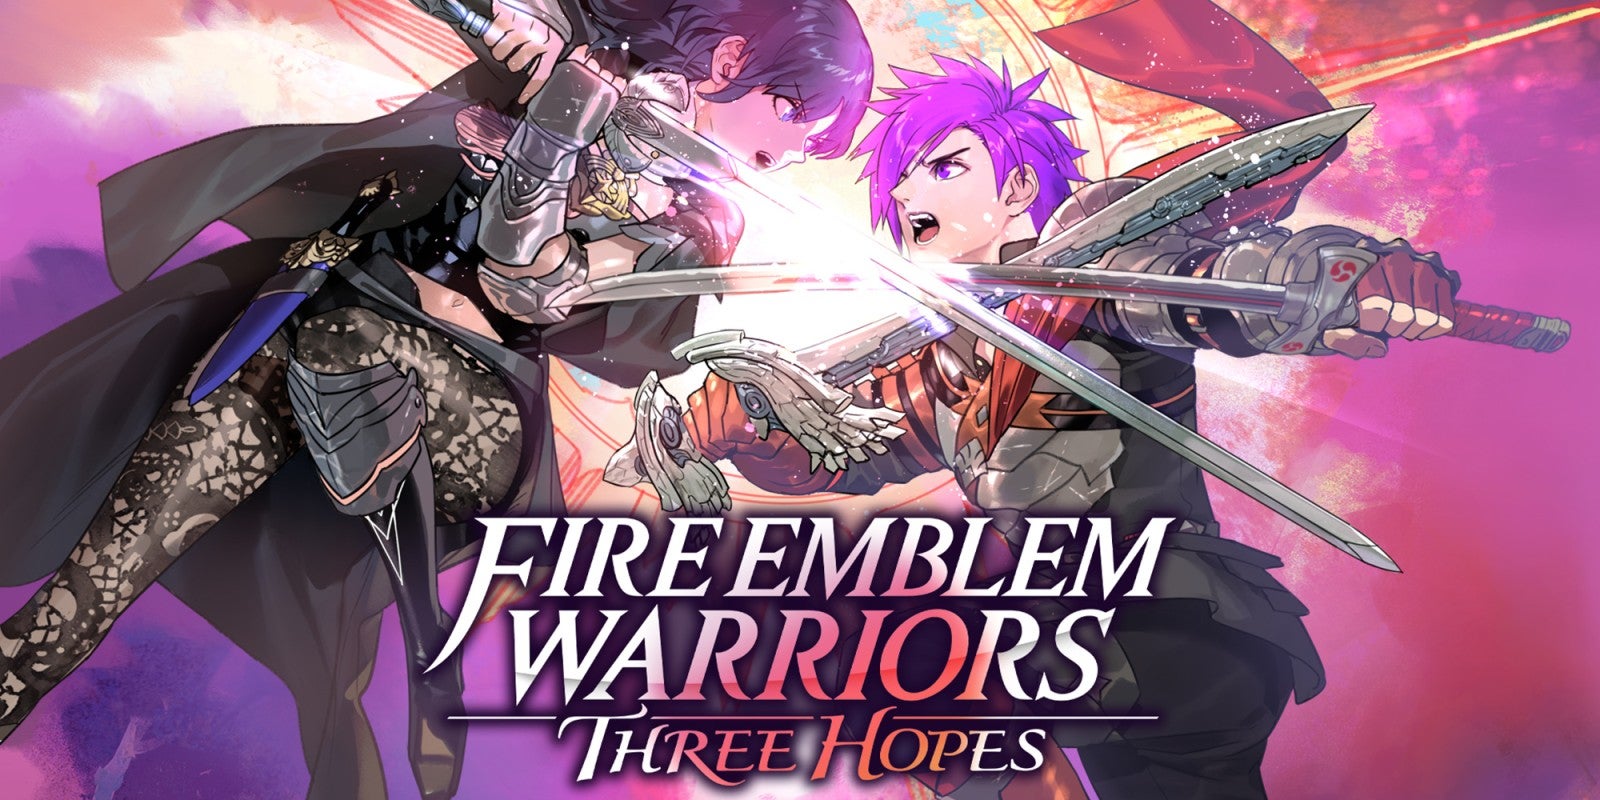 Afbeeldingen van Fire Emblem Warriors: Three Hopes maakt hoopvol